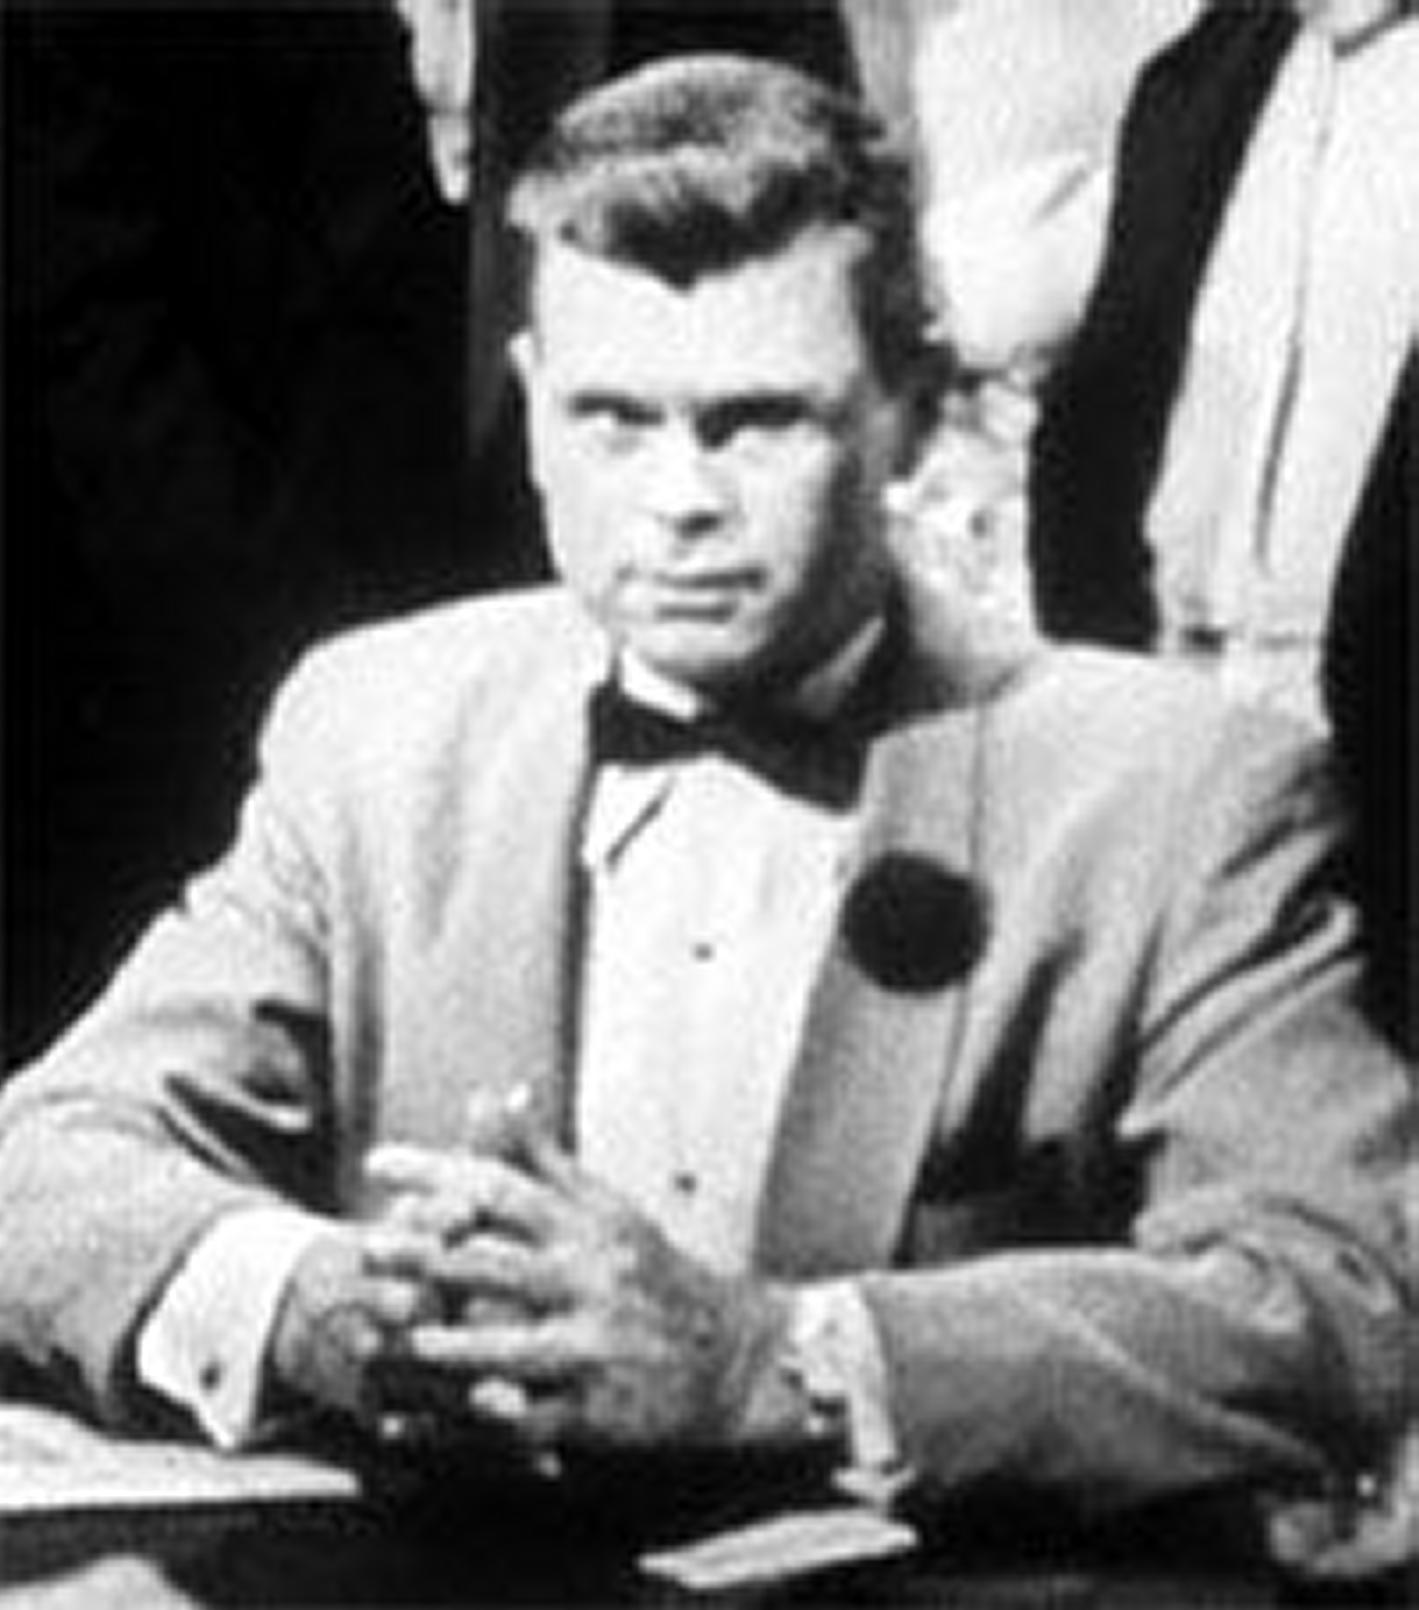 Barry Nelson Casino Royale 1954